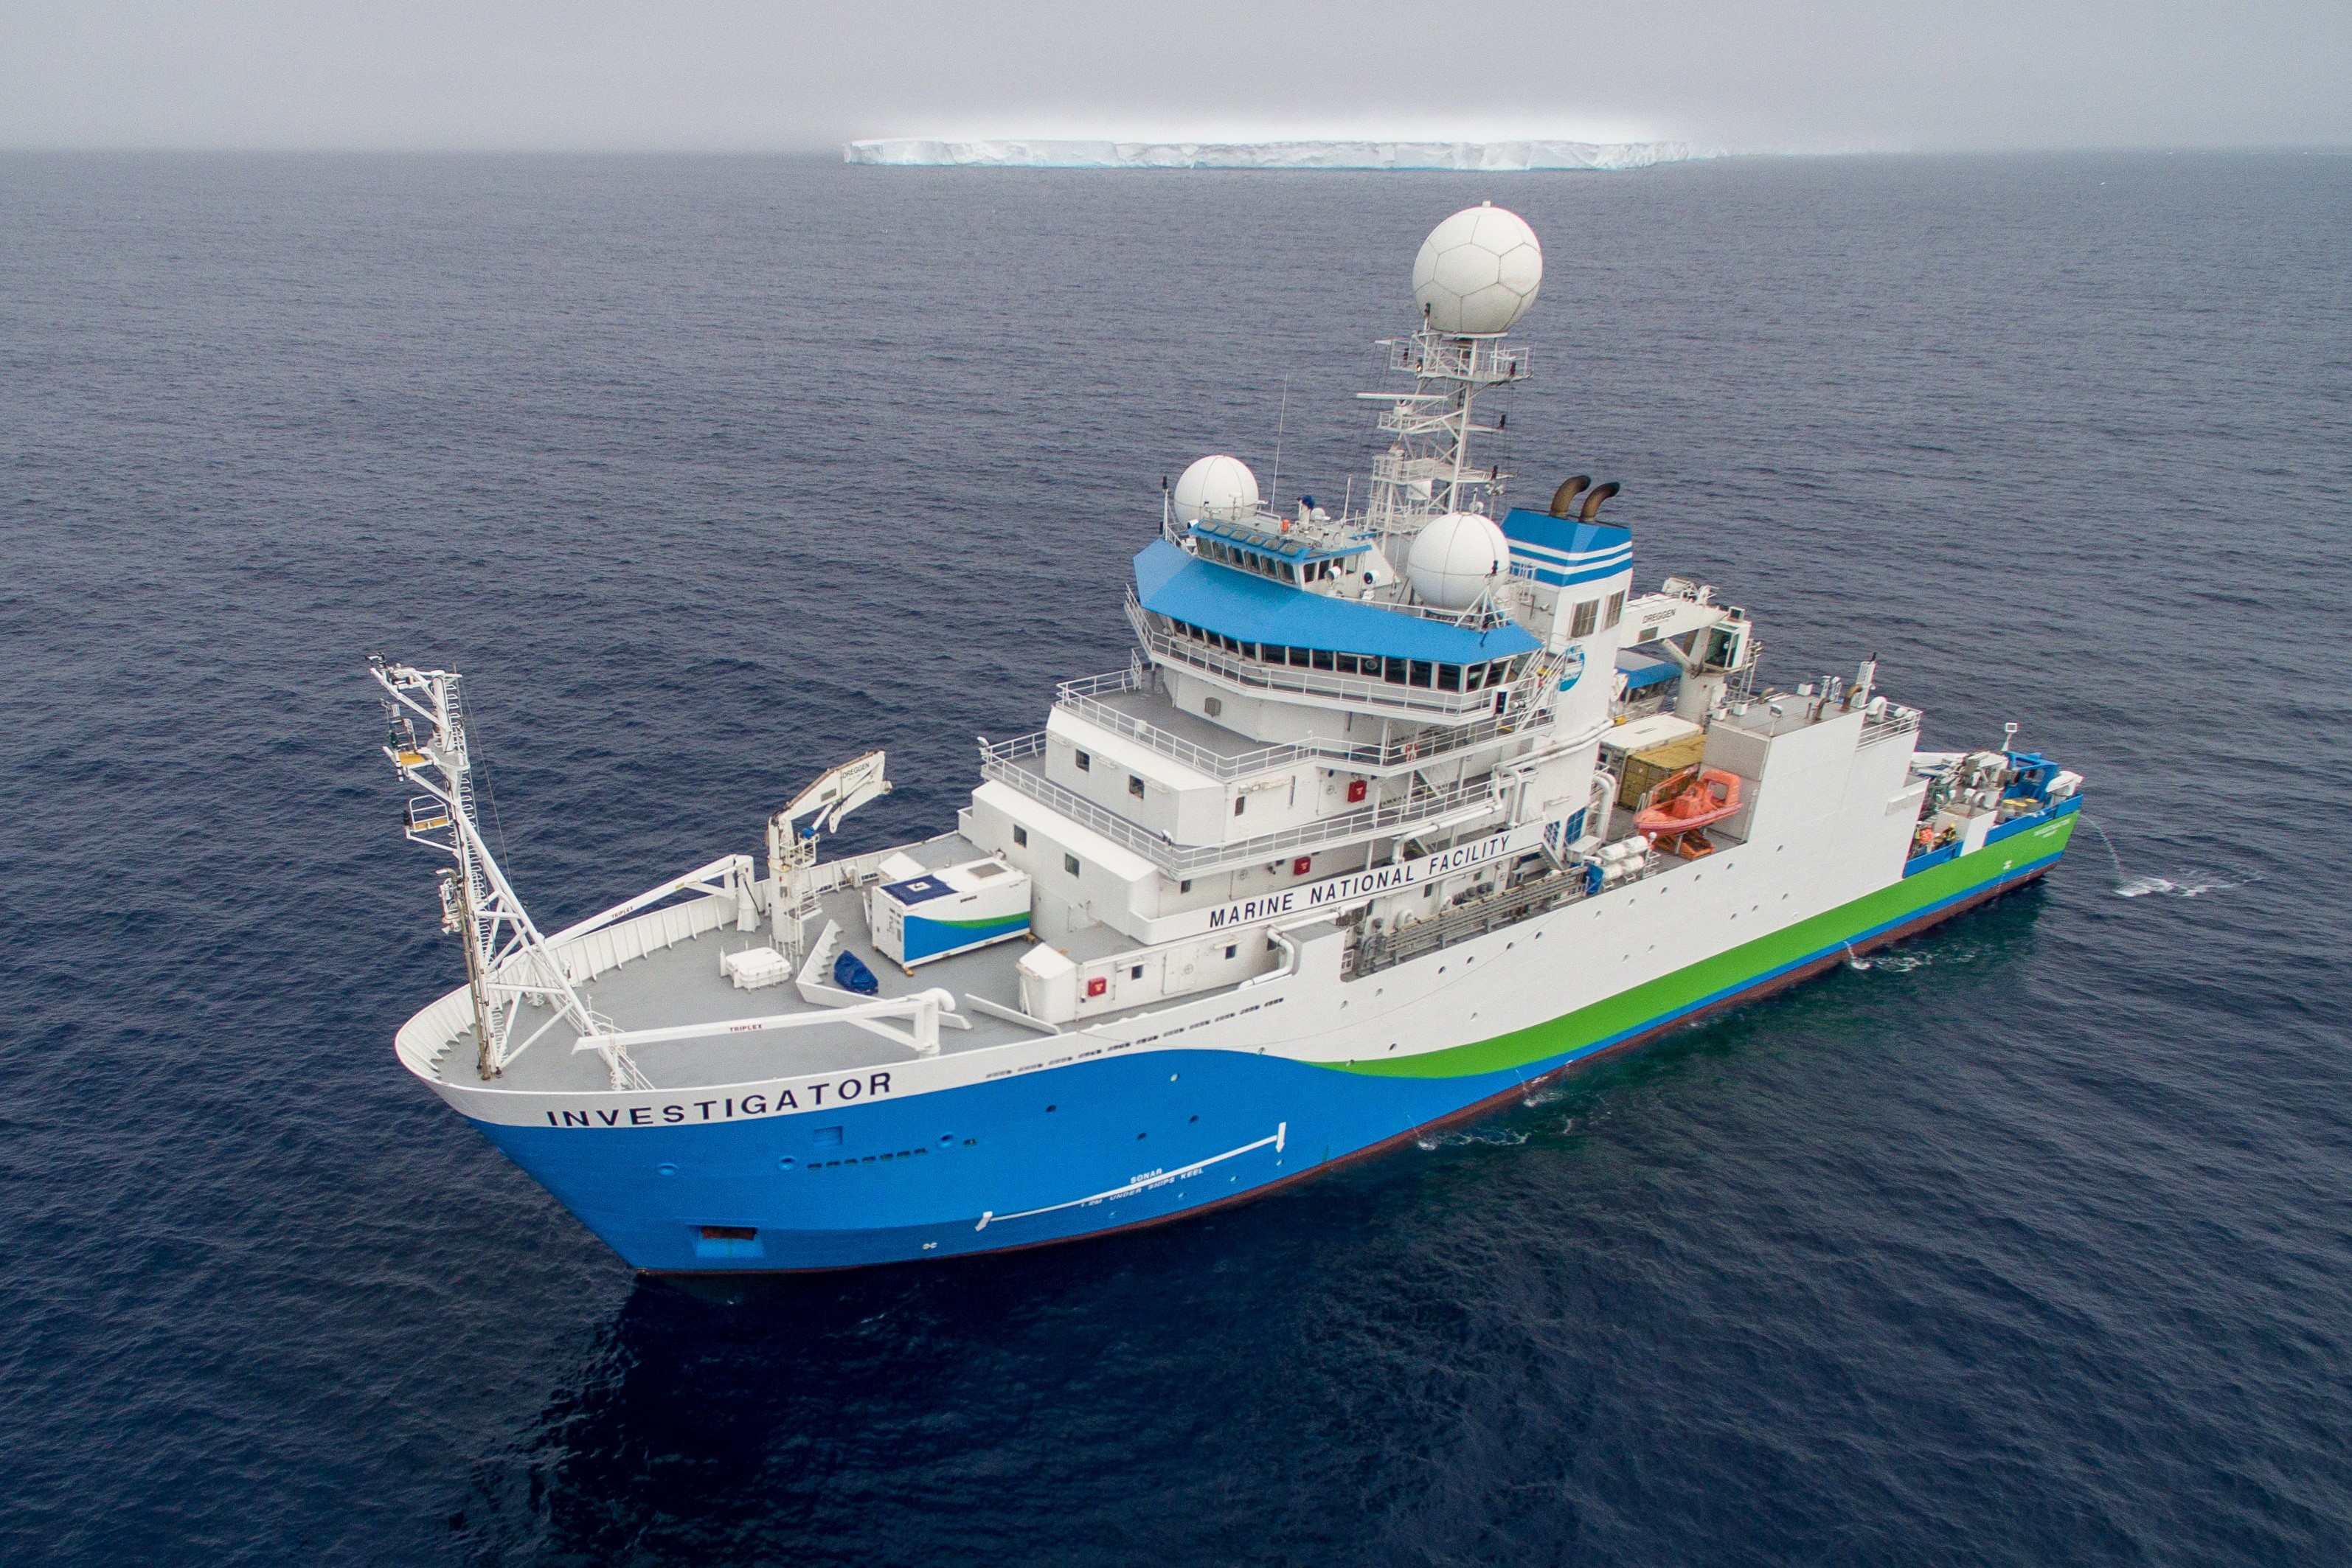 CSIRO research vessel (RV) Investigator in Antarctic waters in 2017. Photo: CSIRO